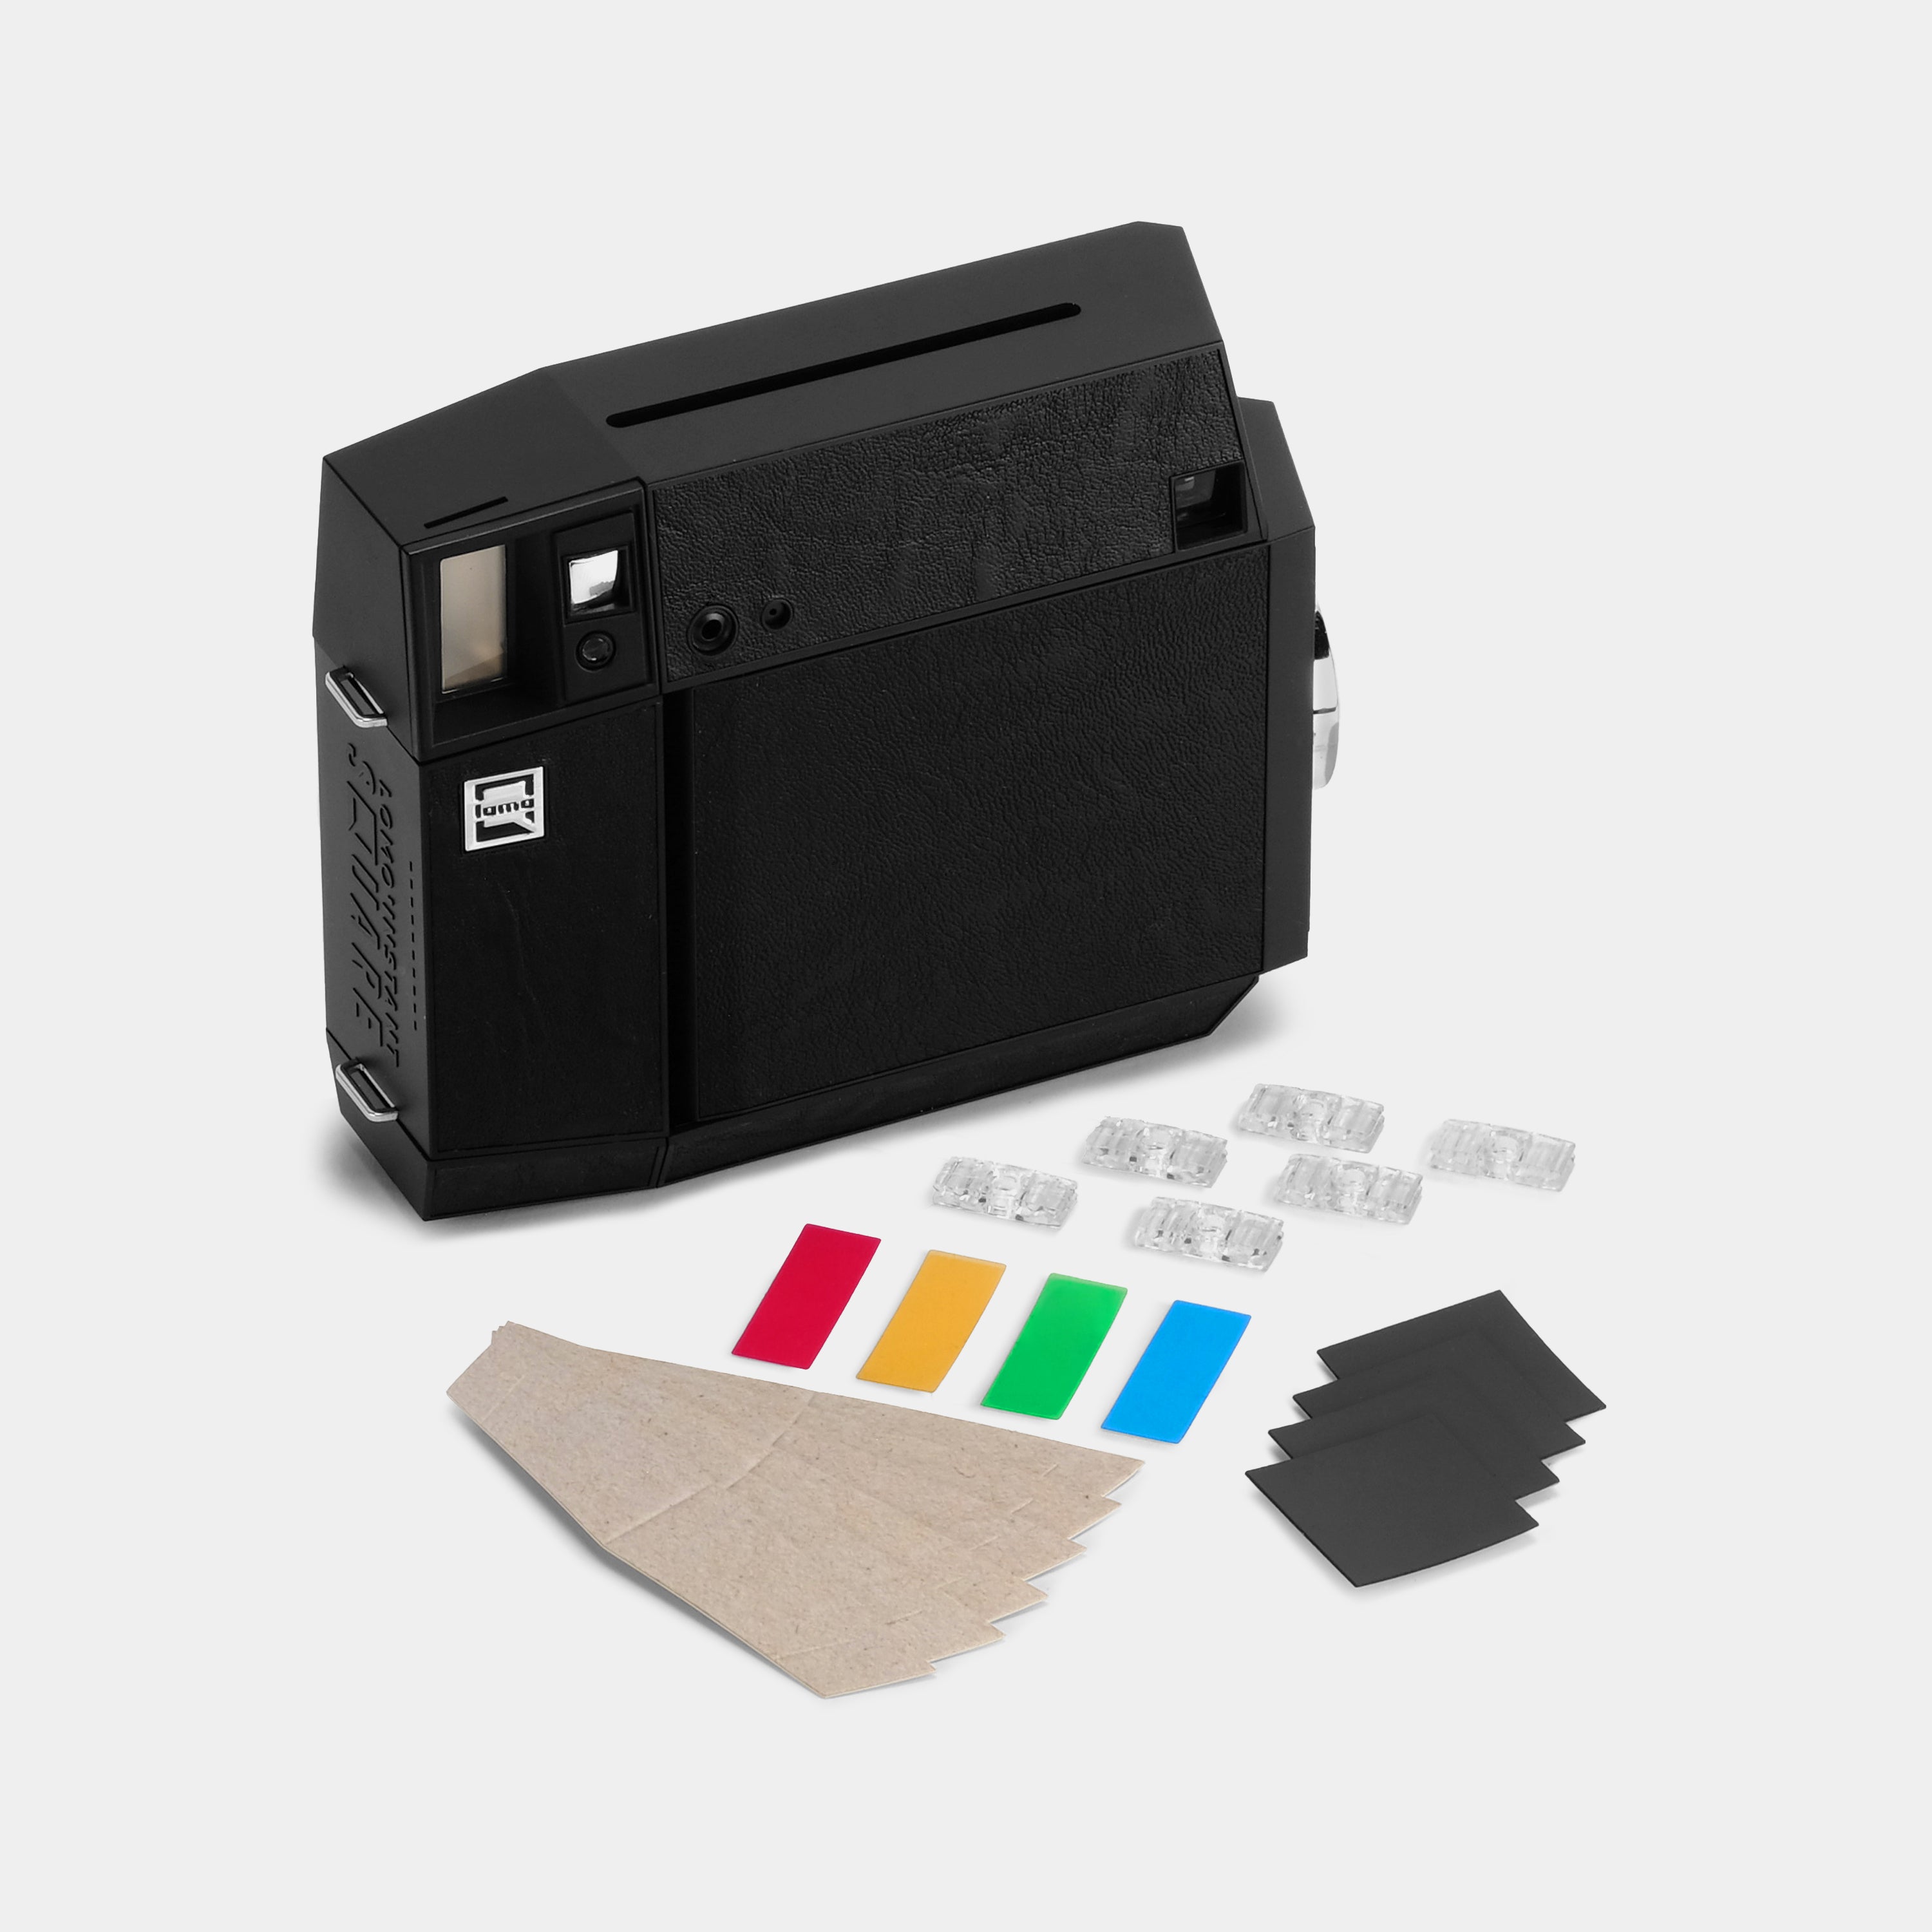 Lomography Lomo’Instant Square Glass Camera Black Edition Instant Film Camera